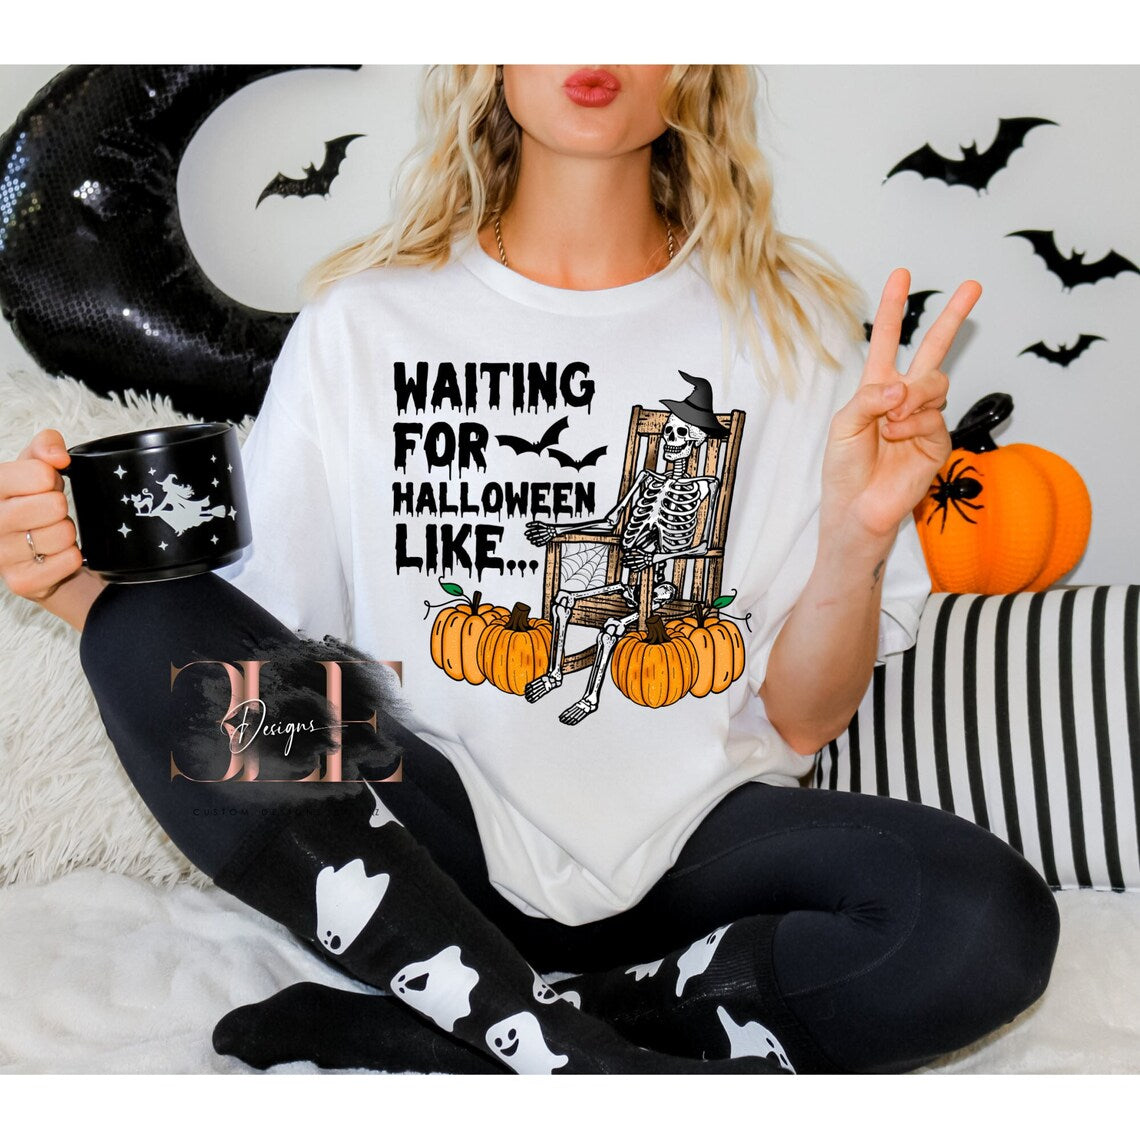 Waiting on Halloween Cute Halloween Shirt, Skeleton Halloween Tee, Halloween Party Shirt, Gift Ideas For Women, Funny Halloween Tee